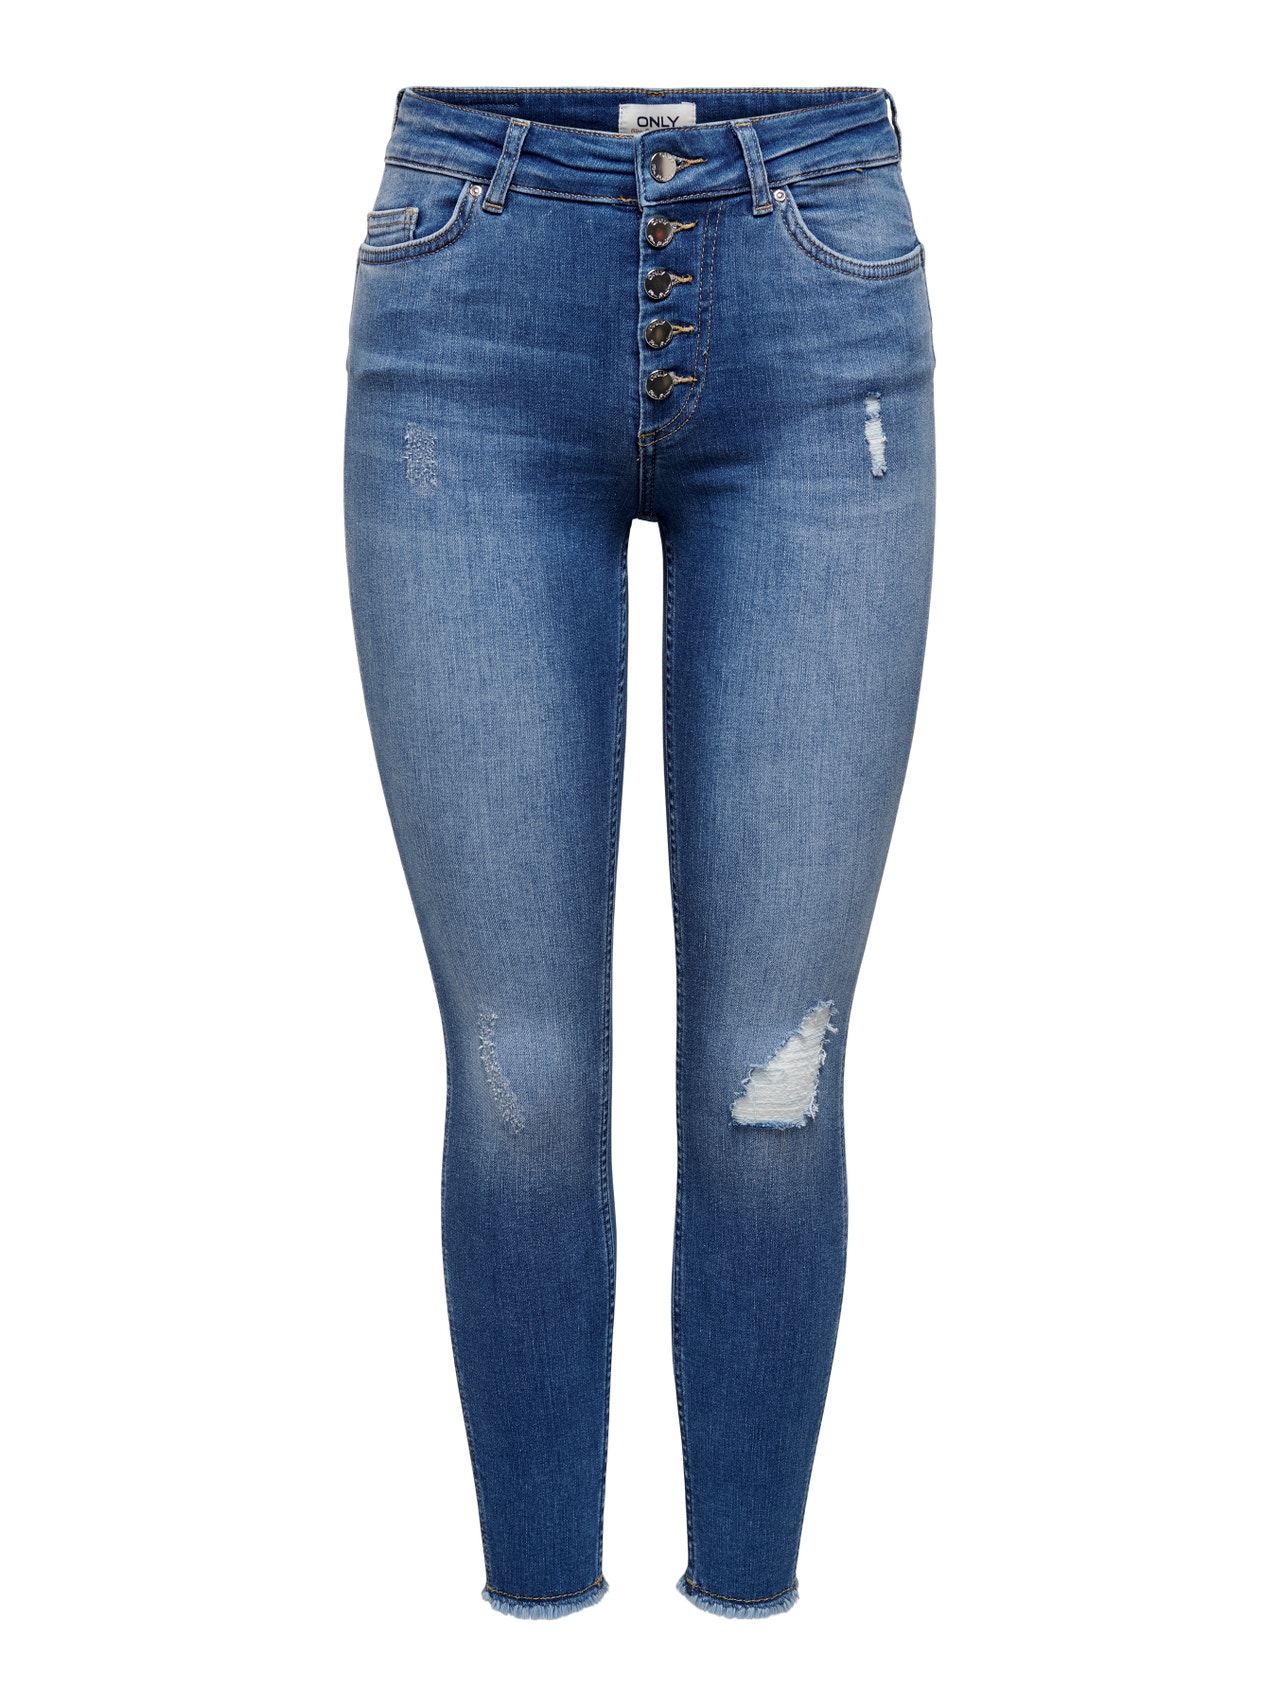 ONLY Jeans Skinny Fit Taille moyenne Ourlé destroy -Medium Blue Denim - 15244617